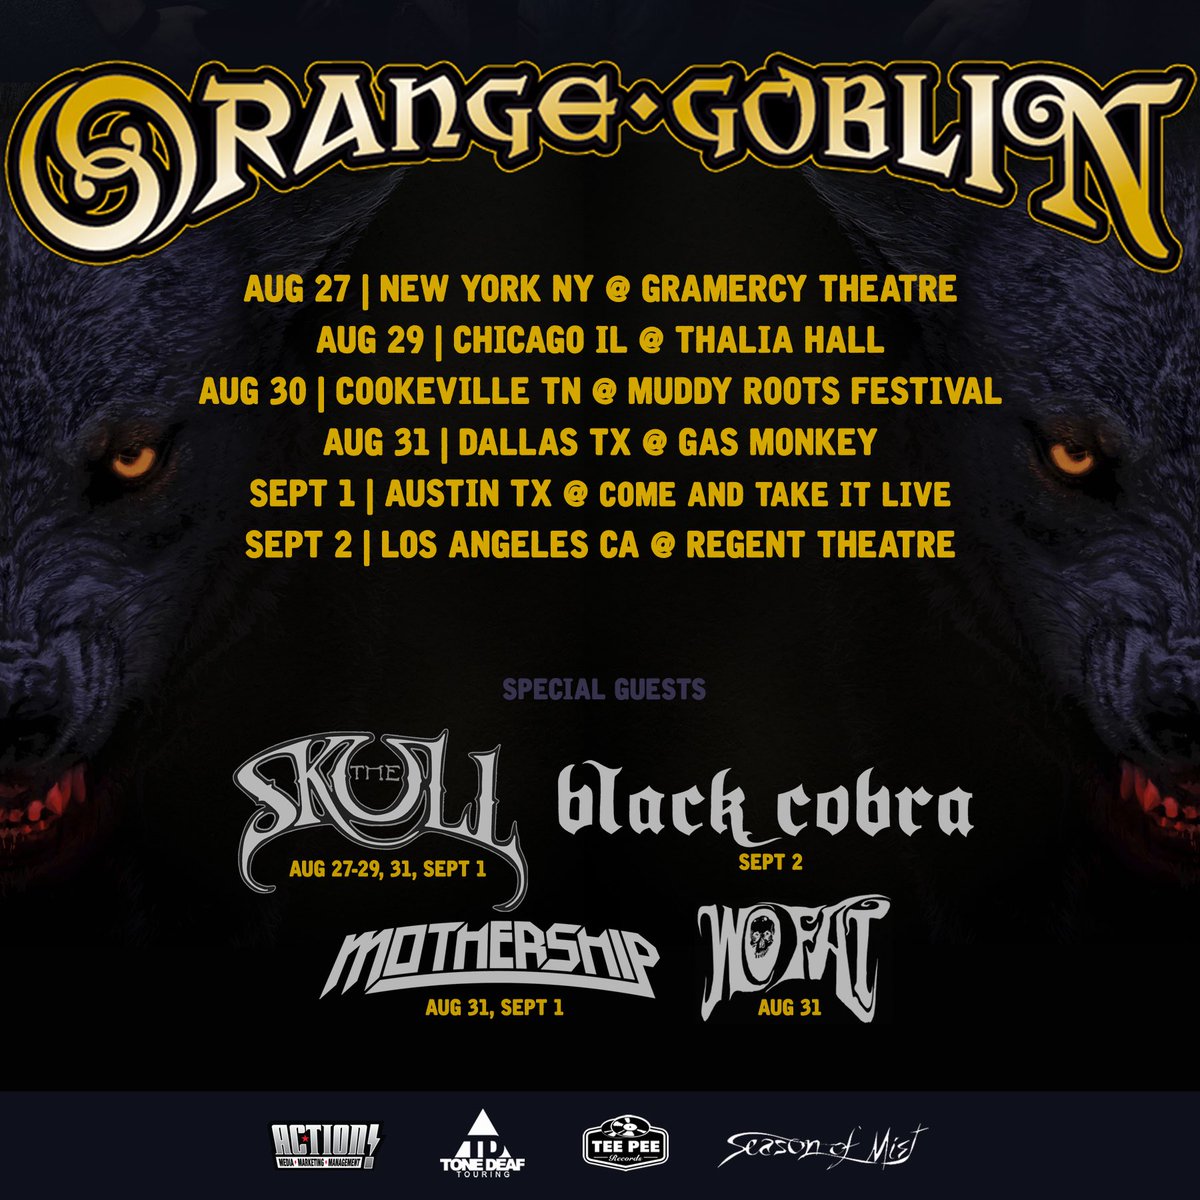 End of summer with Orange Goblin! #orangegoblin #mothership #wofatband #blackcobra #summer2019